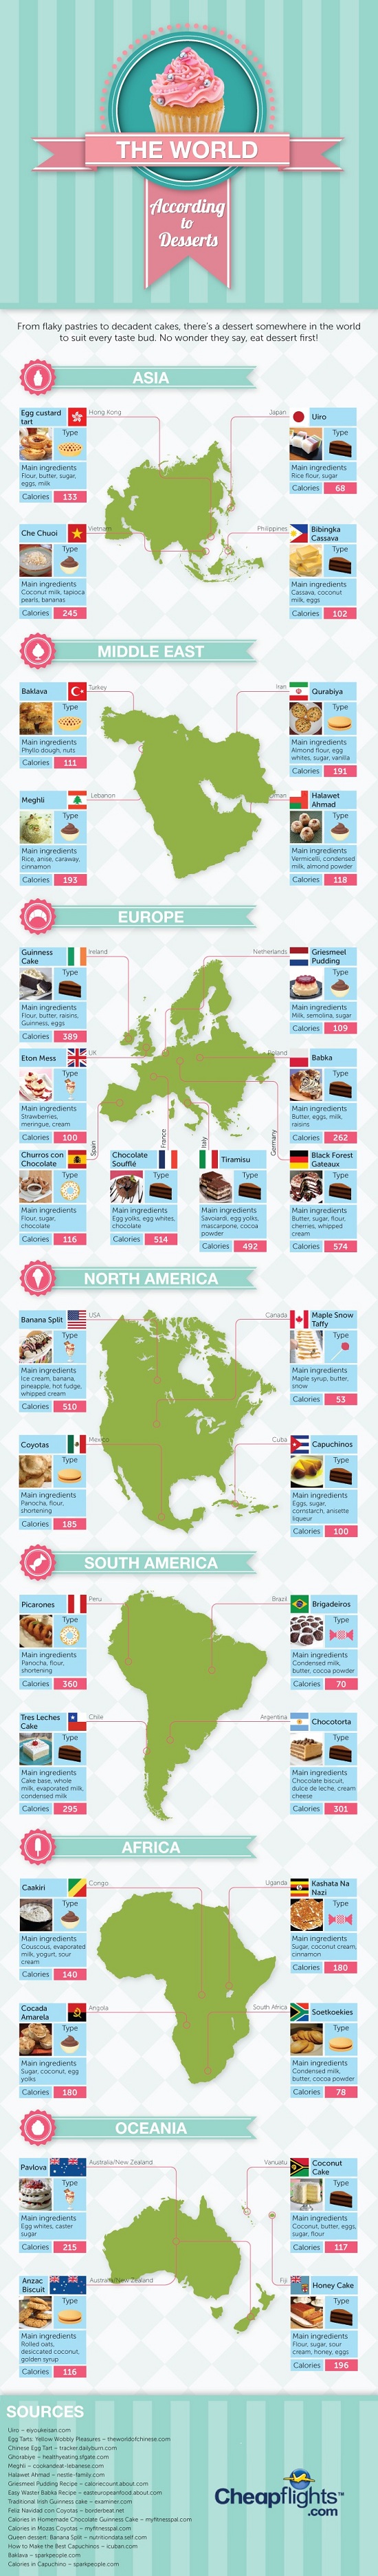 The World According To Desserts